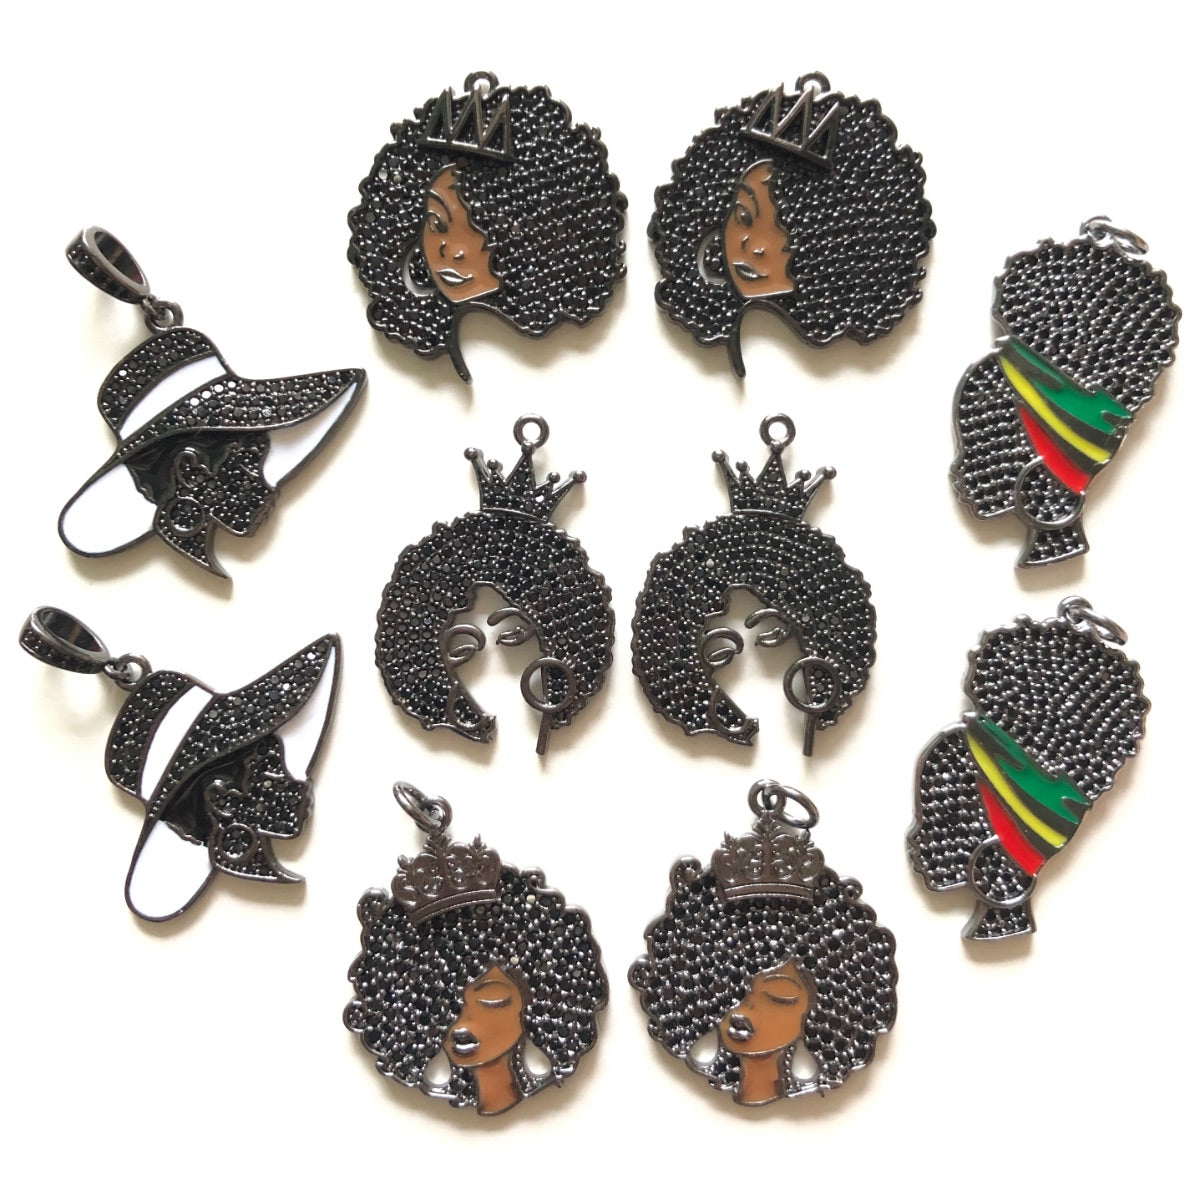 10pcs/lot Mix CZ Pave Afro Black Girl Charms Bundle 1-Black on Black CZ Paved Charms Afro Girl/Queen Charms Mix Charms Charms Beads Beyond